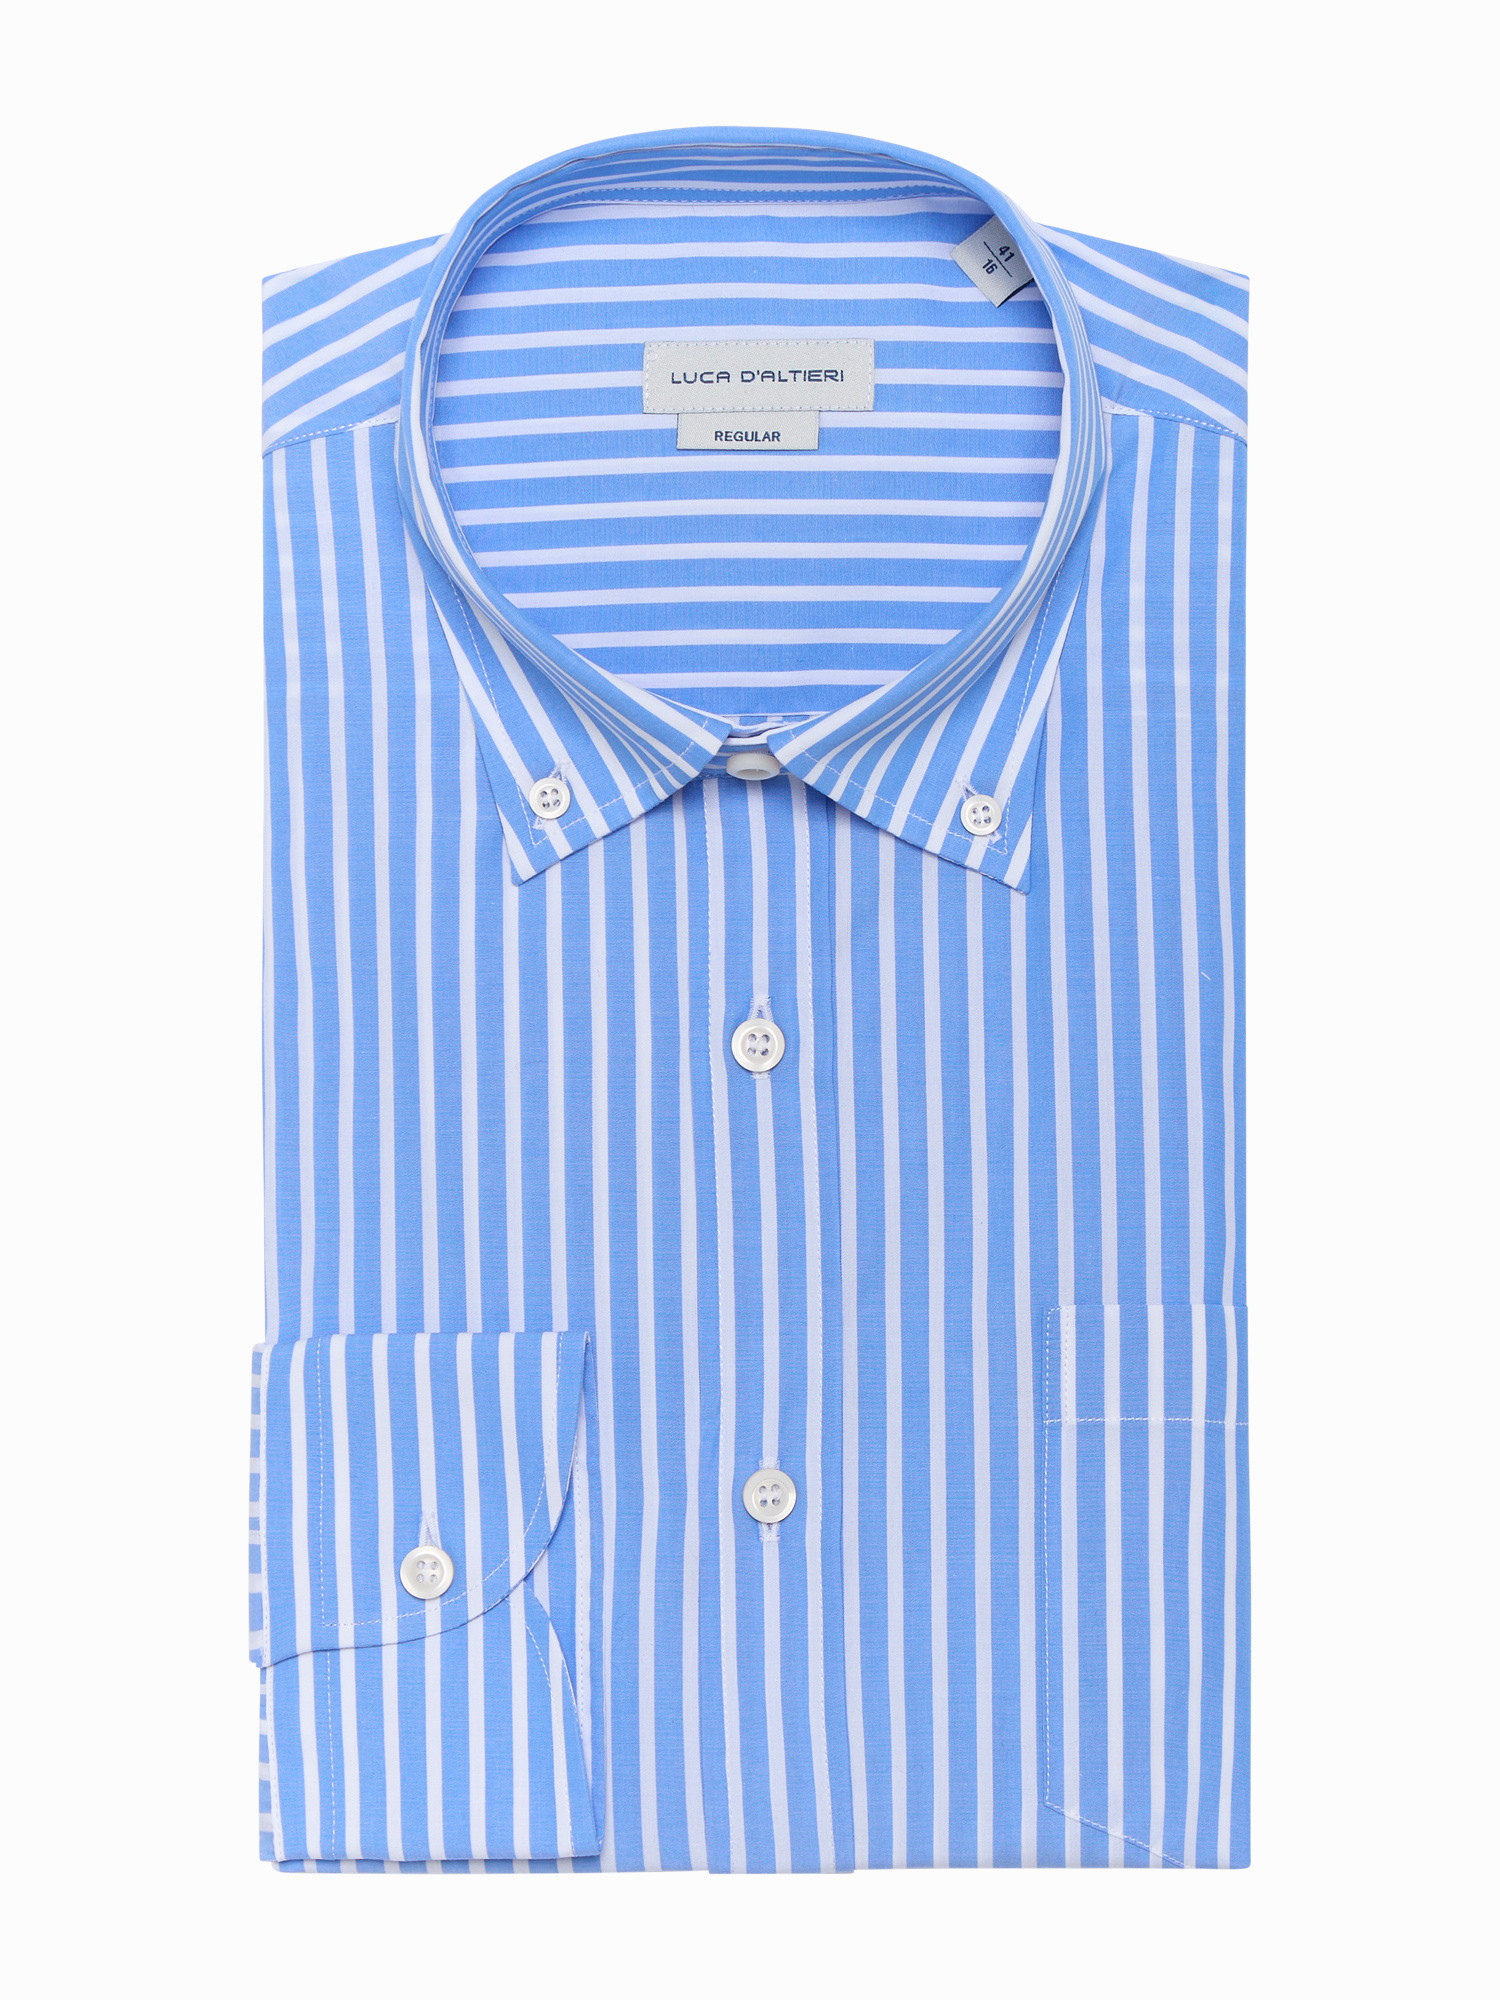 Luca D'Altieri - Regular fit casual shirt in pure cotton poplin, Light Blue, large image number 0